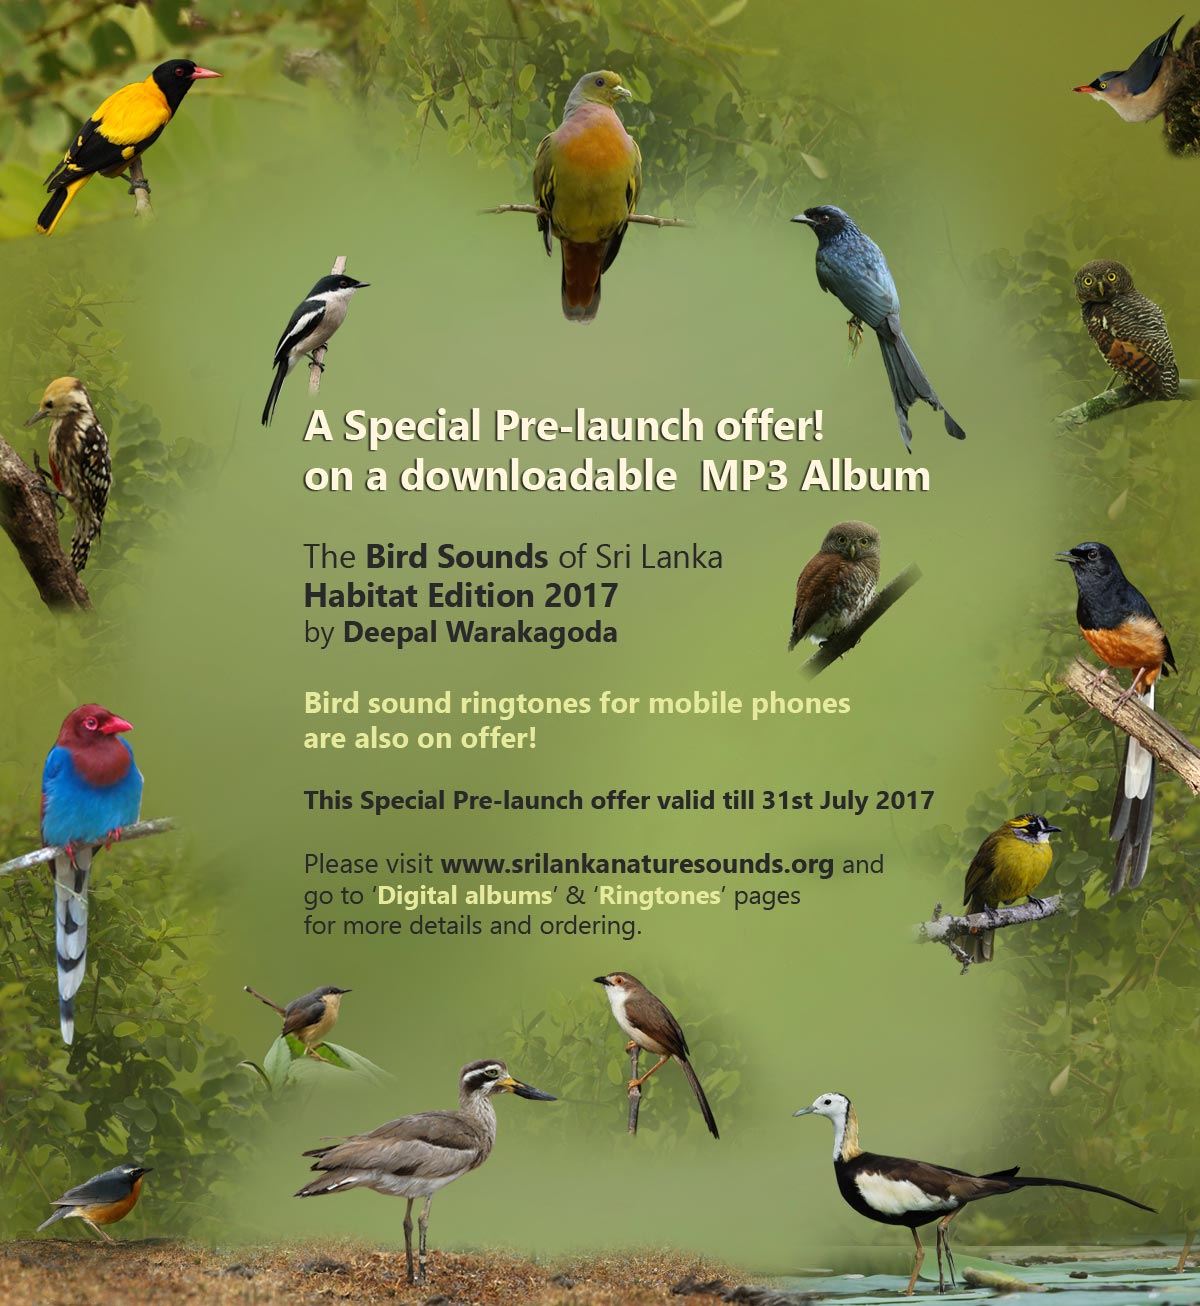 bird sounds of Sri Lanka | Sri Lanka Nature Sounds